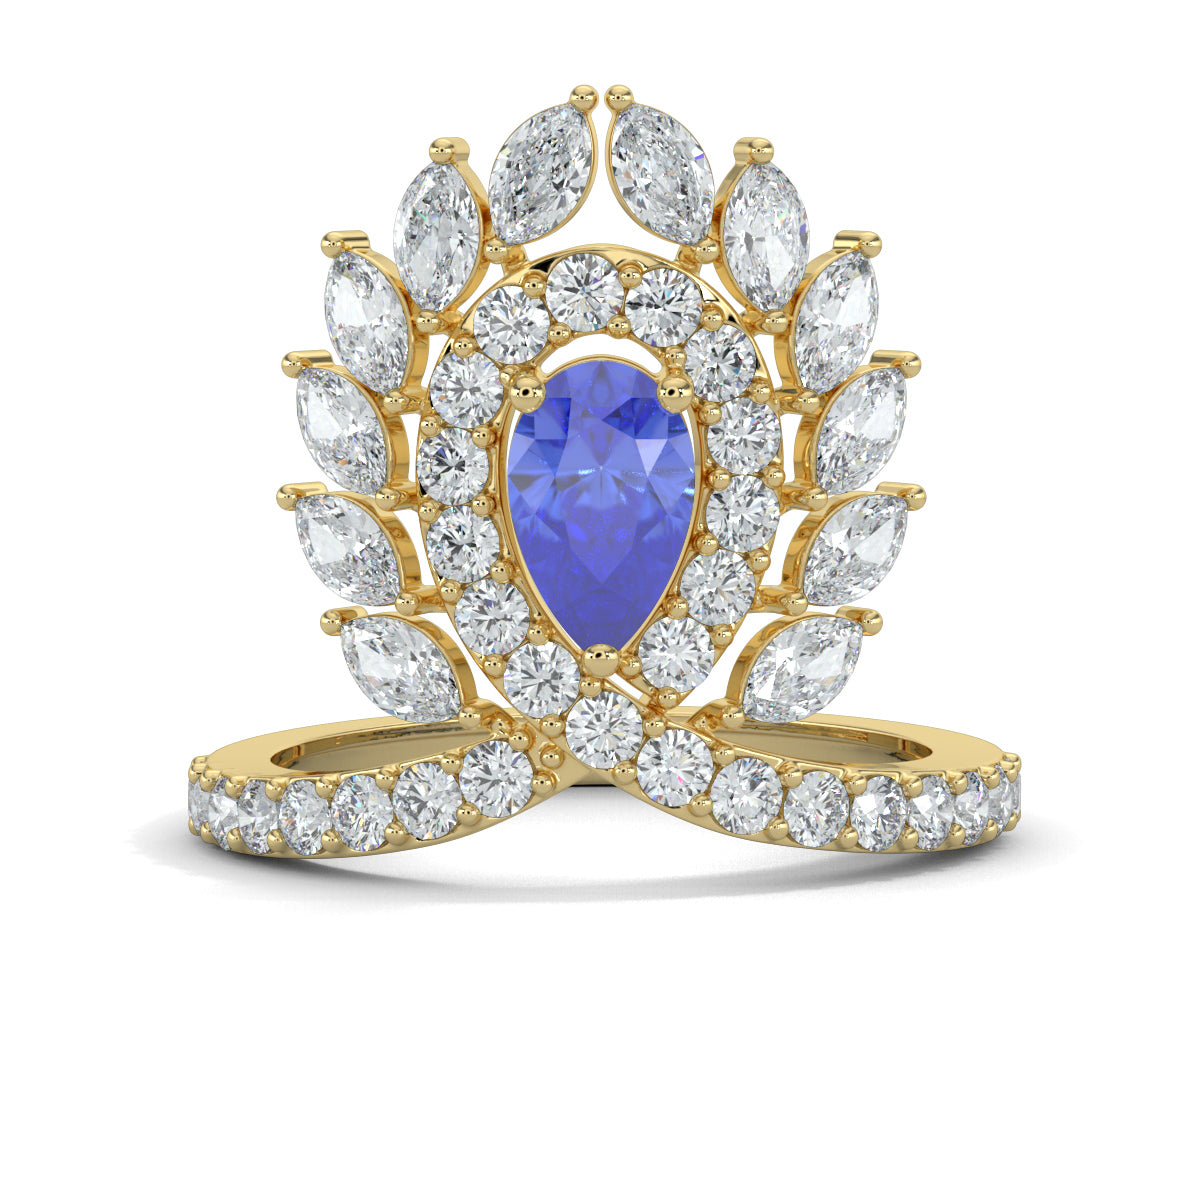 Yellow Gold, Diamond Ring, Natural diamond ring, Majestic plume diamond ring, cocktail ring, lab-grown diamonds, blue sapphire diamond, pear-shaped diamonds, round diamonds, marquise diamonds, luxurious ring, statement jewelry